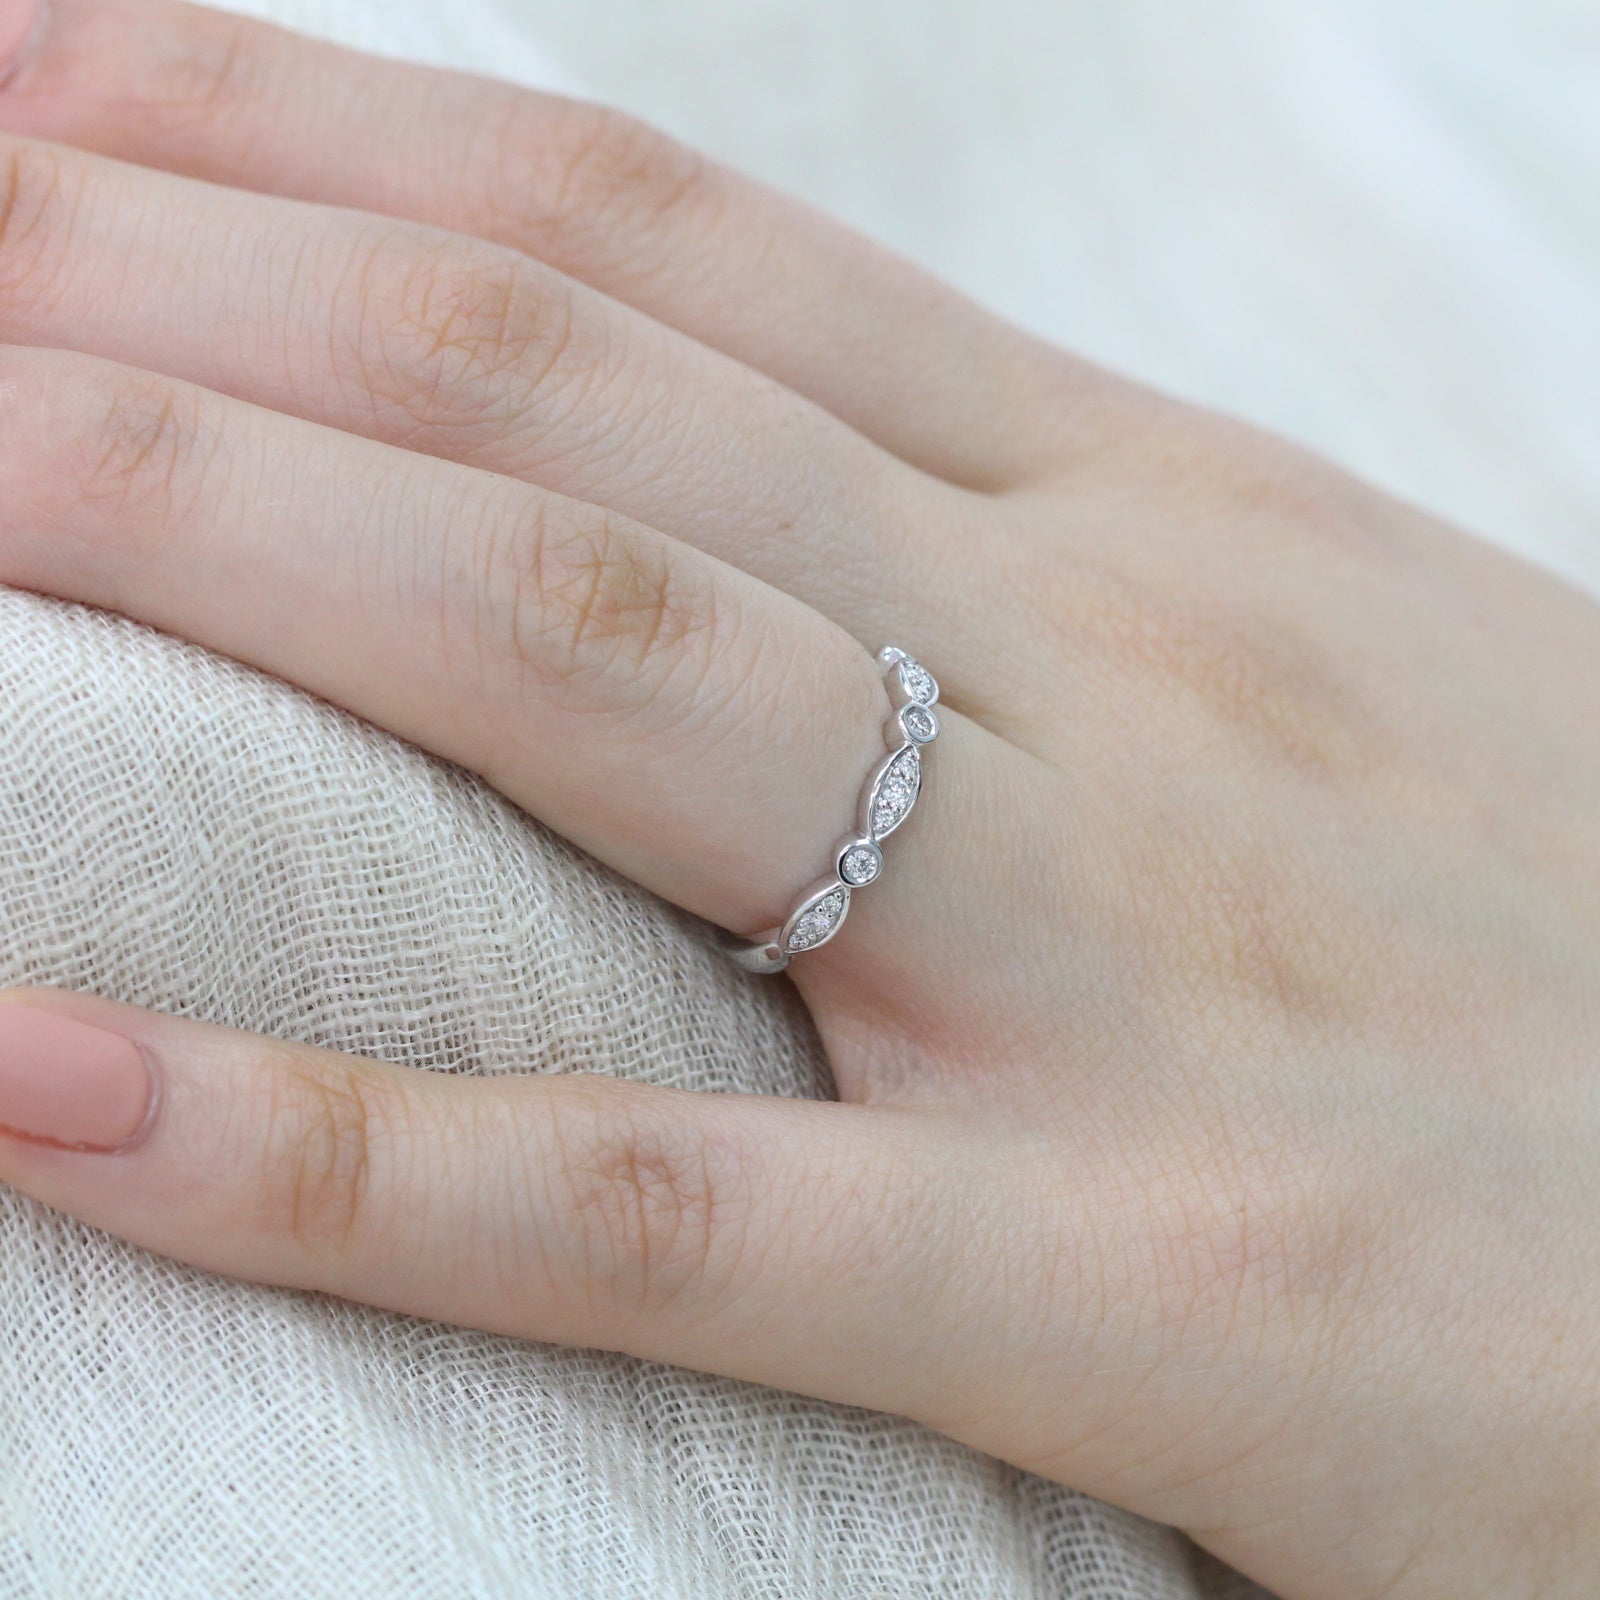 Bezel Diamond Wedding Ring in 14k White Gold Scalloped Band, Size 6.5